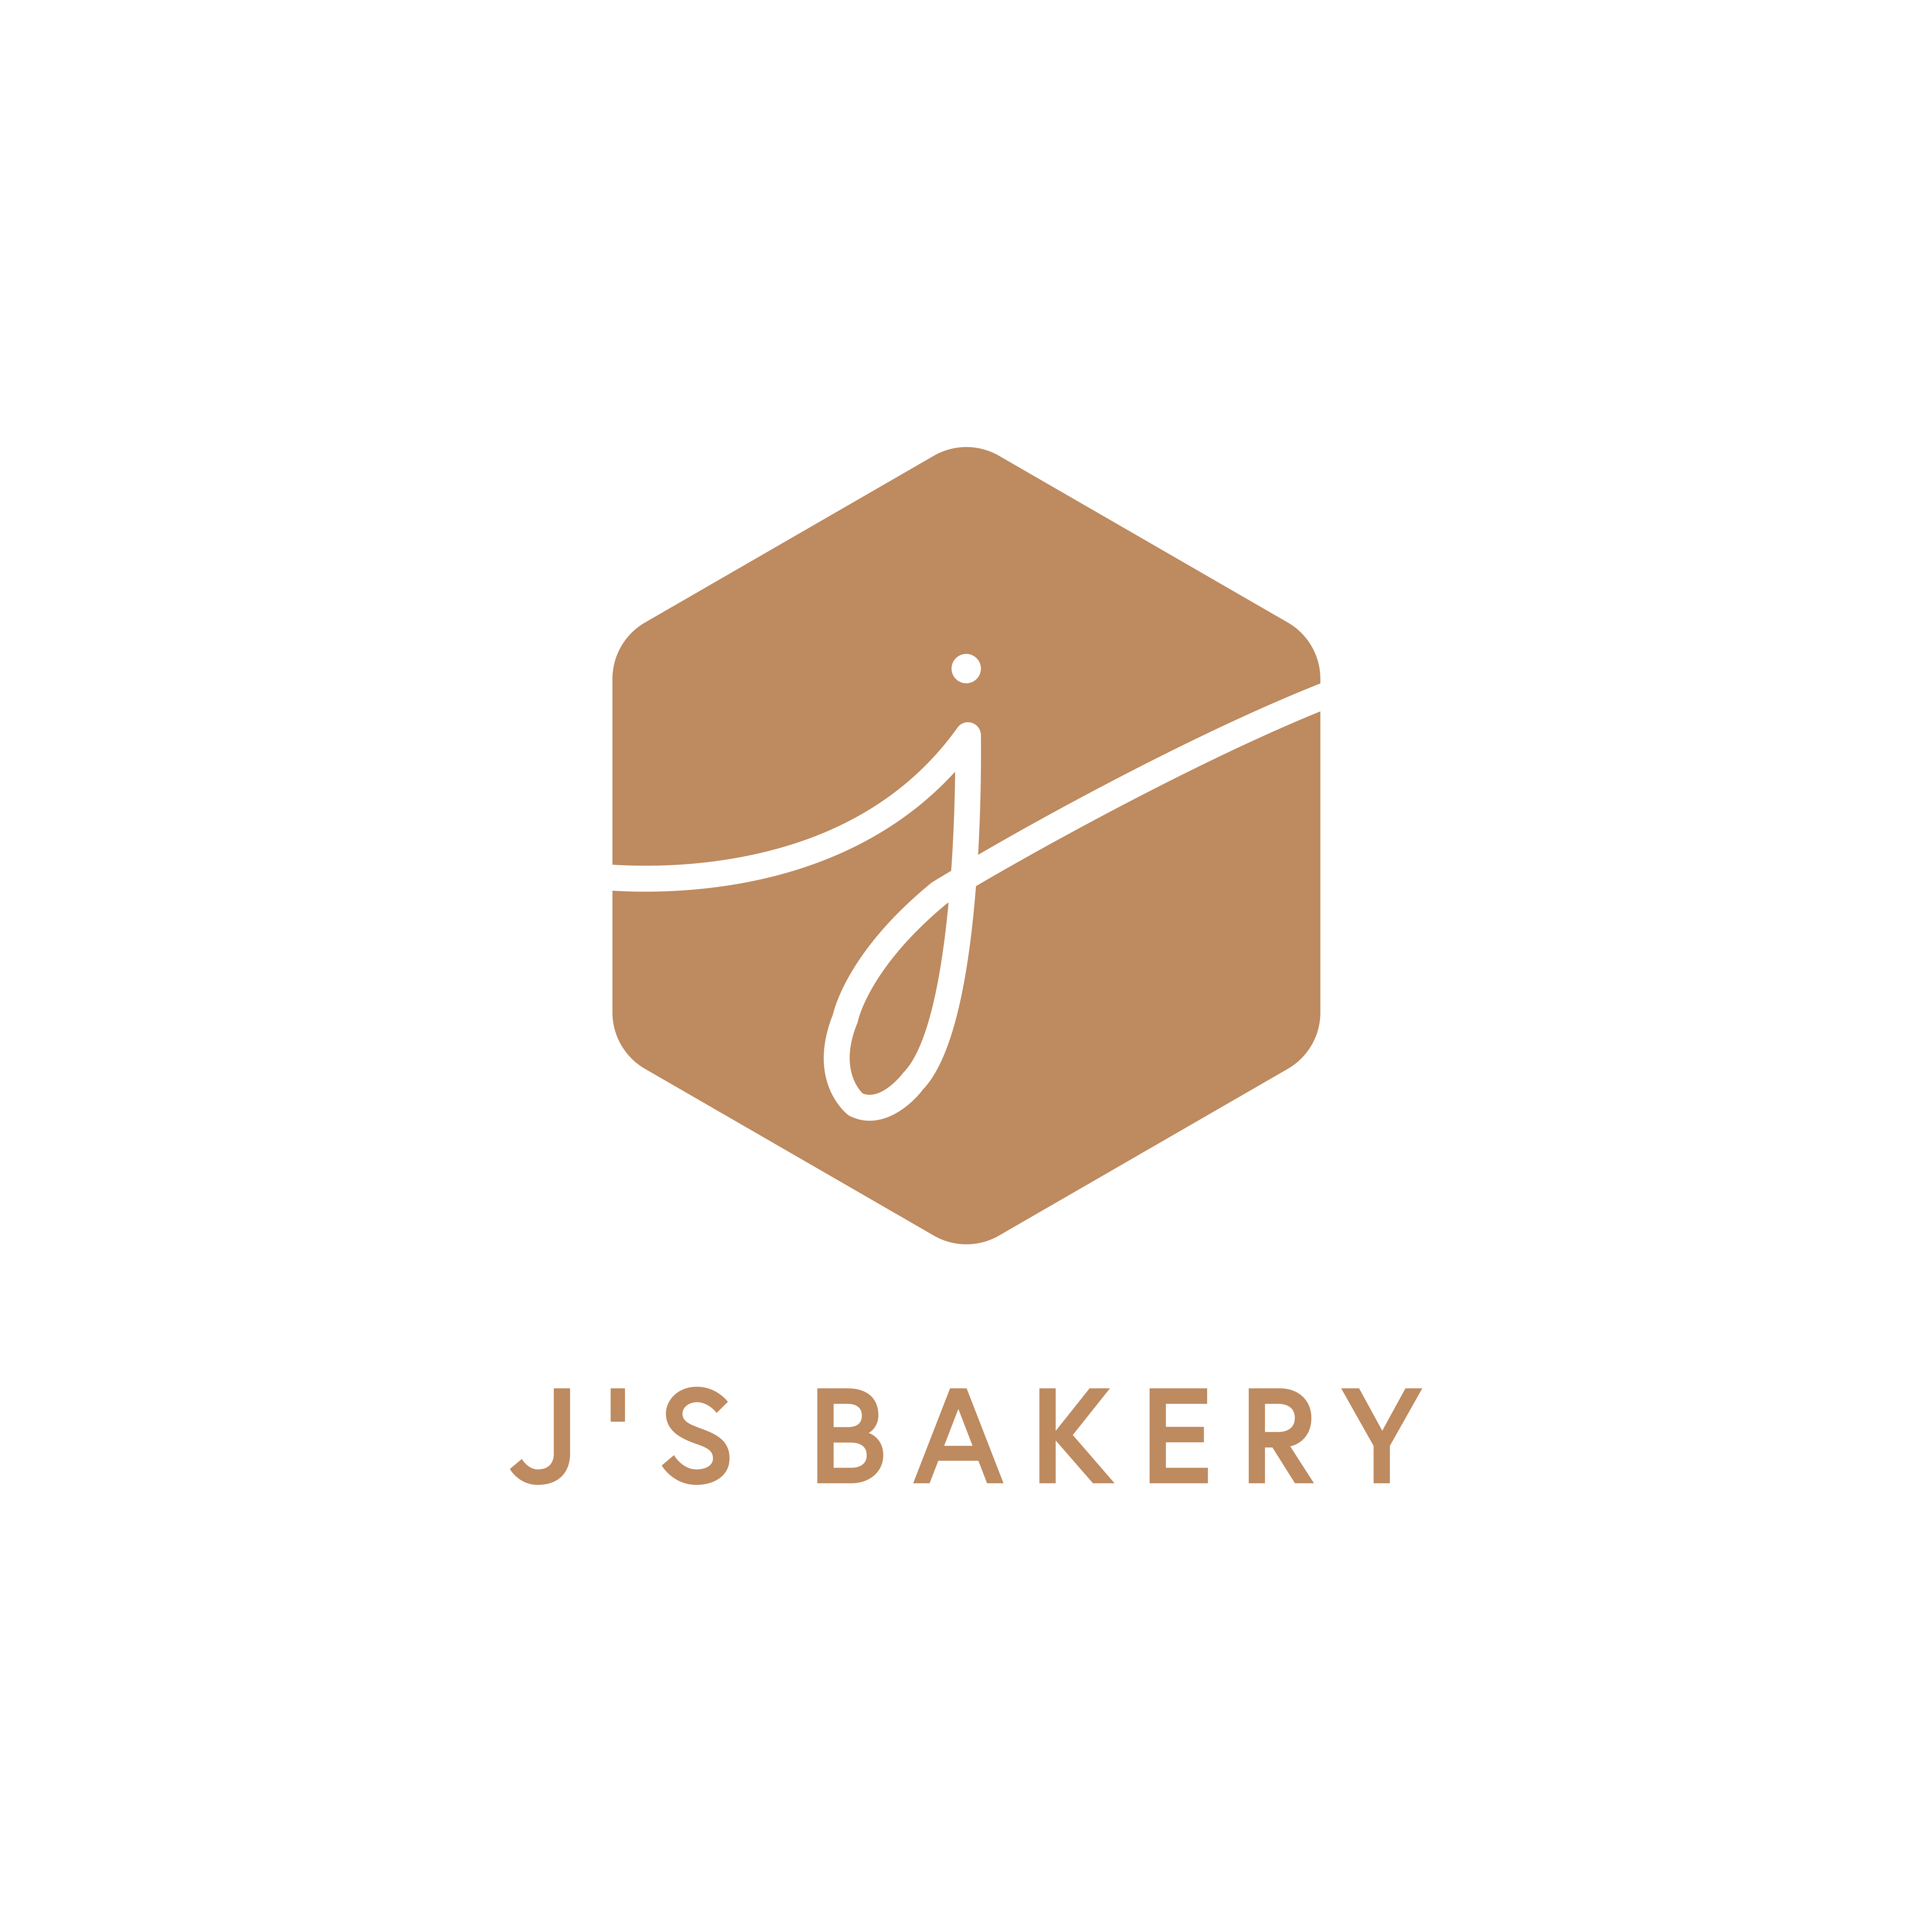 J's Bakery